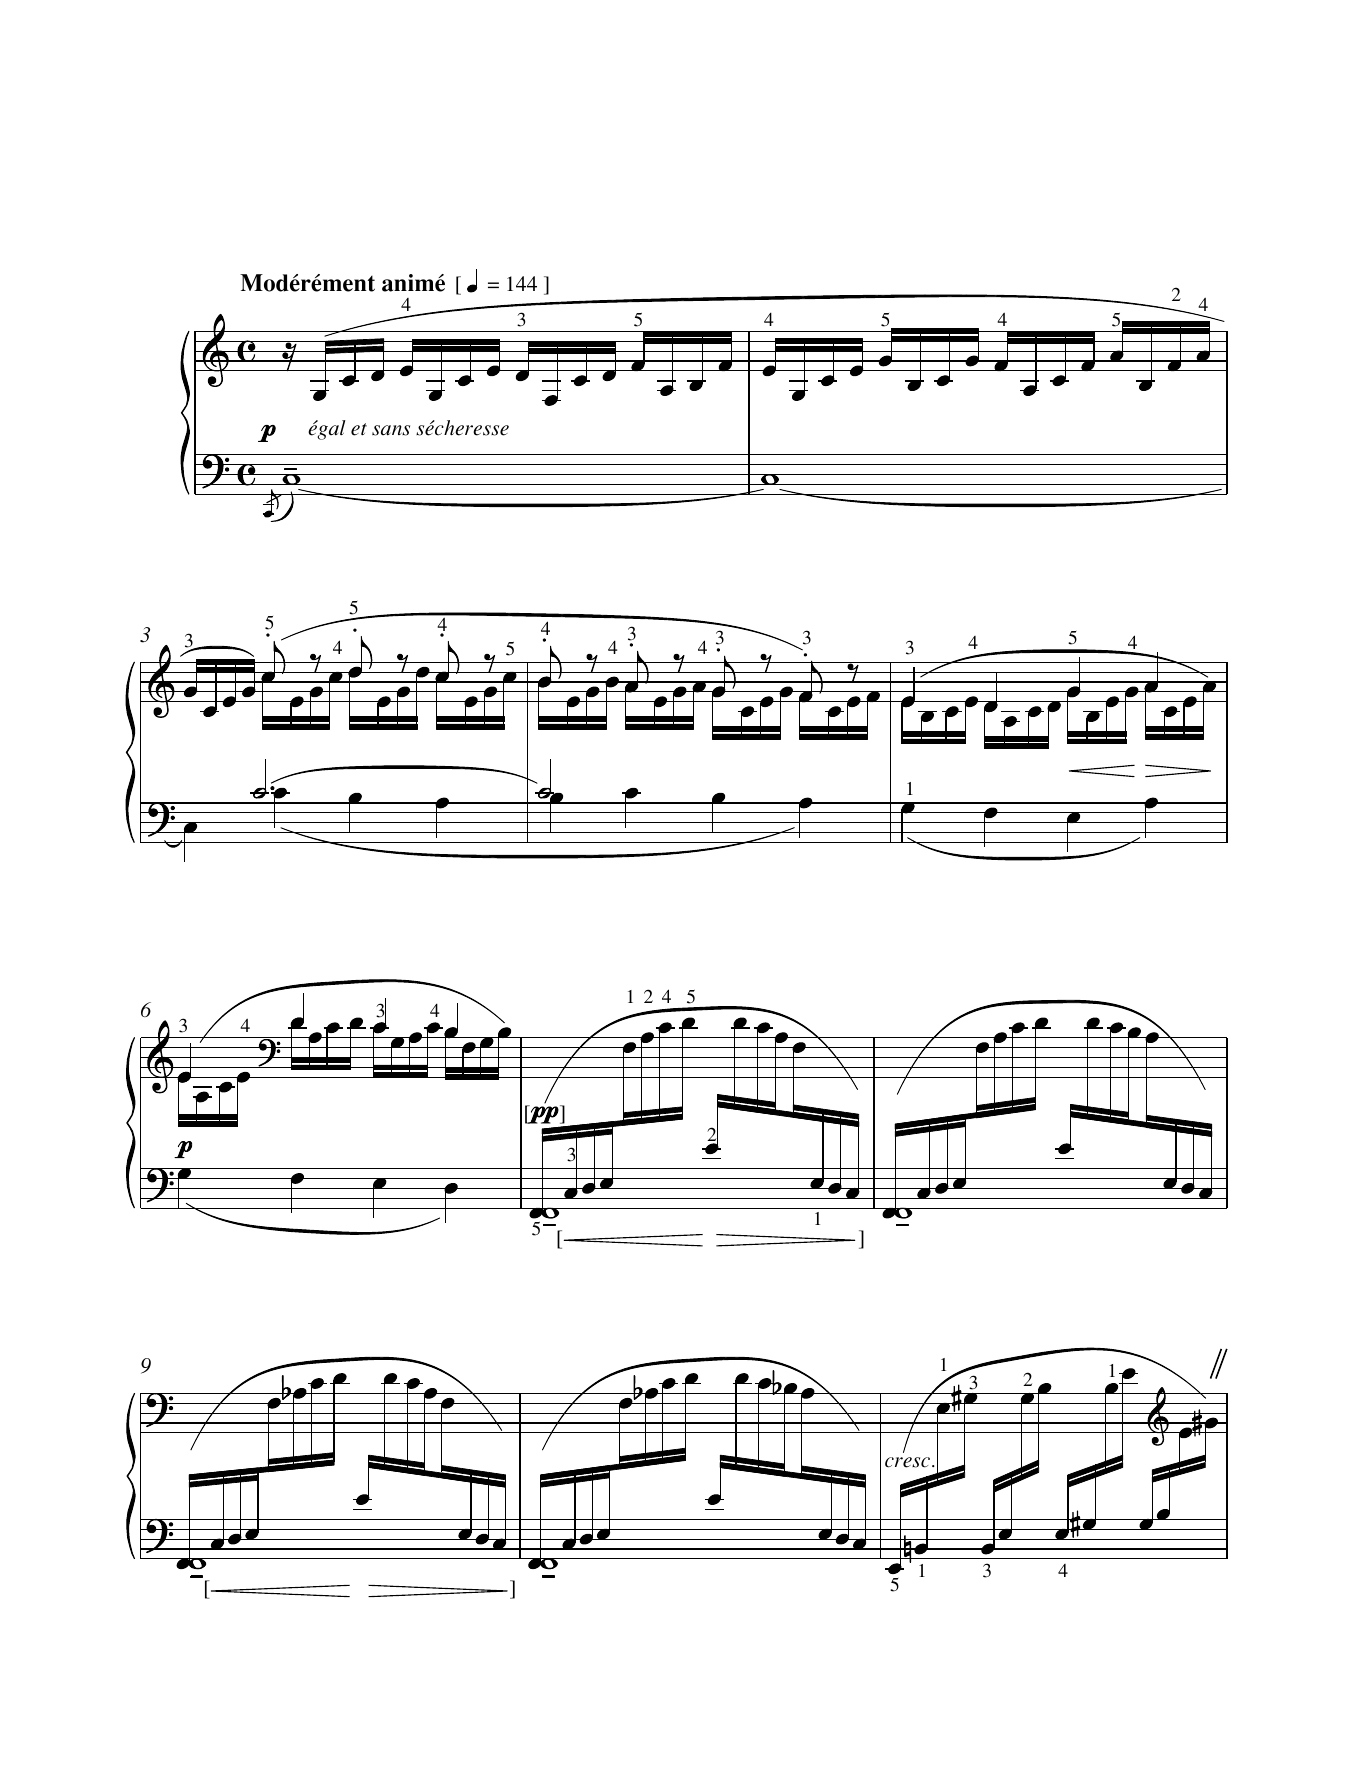 Download Claude Debussy Doctor Gradus ad Parnassum Sheet Music